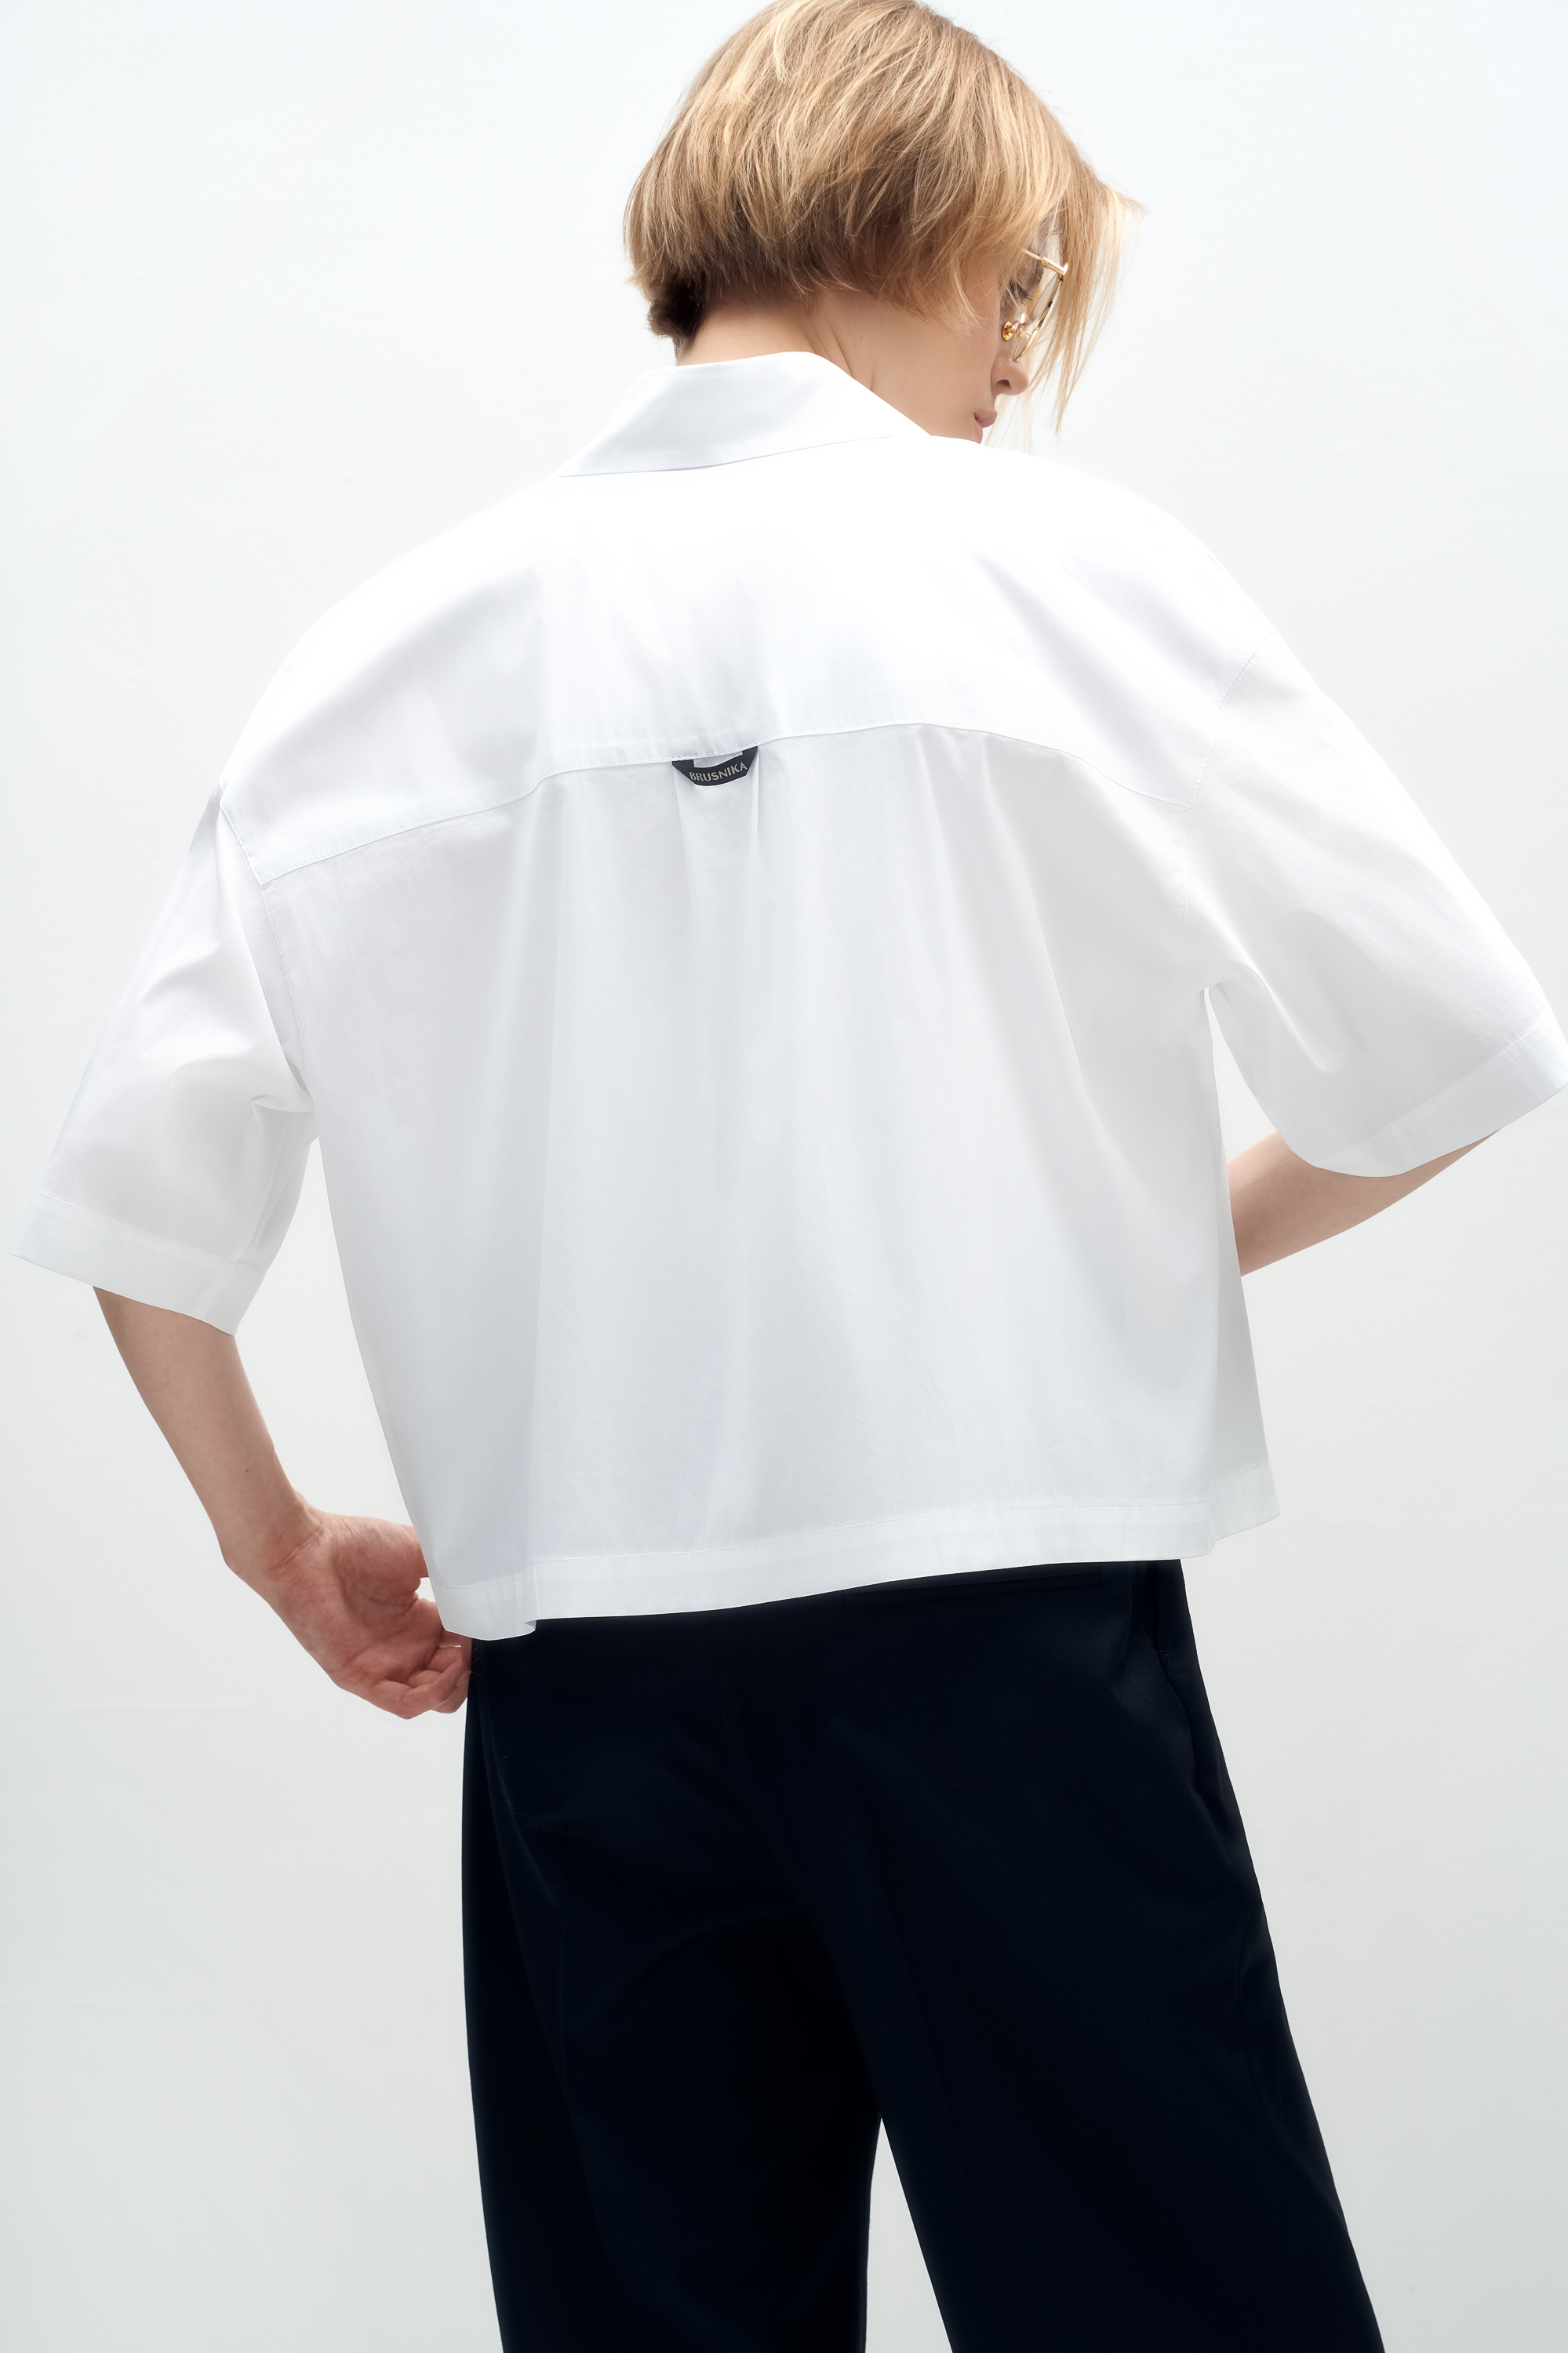 Shirt 4727-02 White from BRUSNiKA